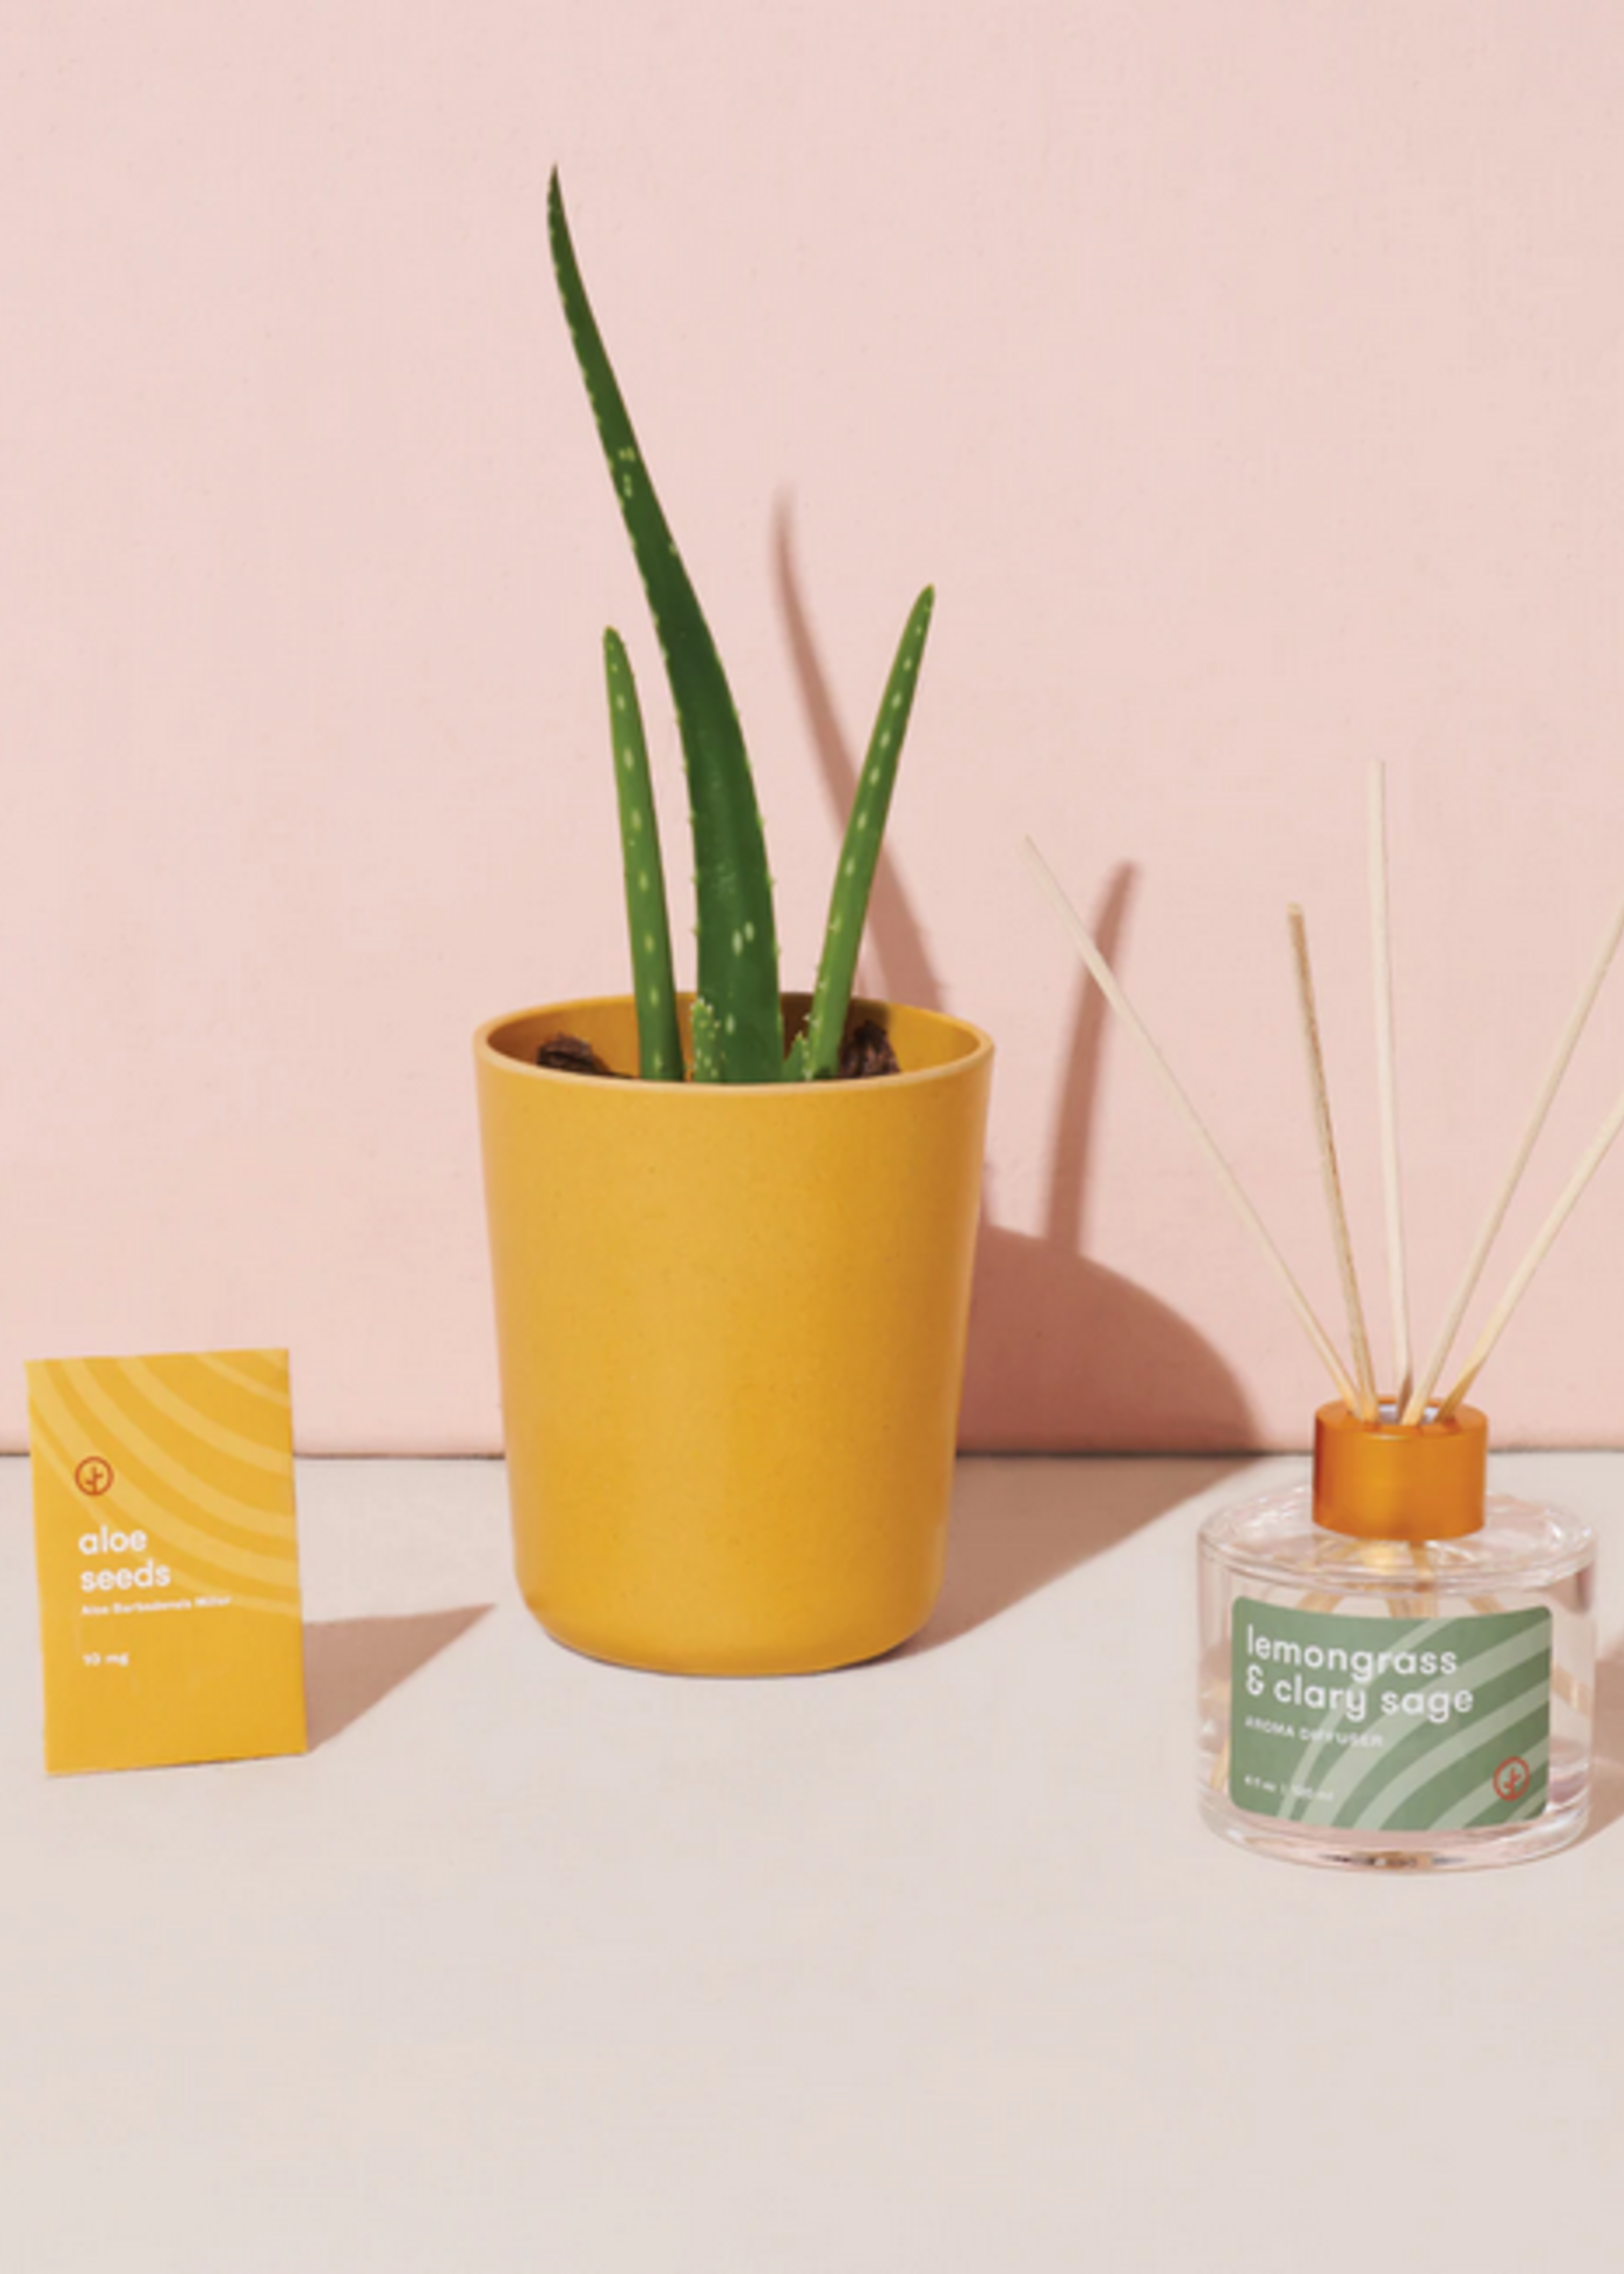 Find Balance Grounding Aloe Kit